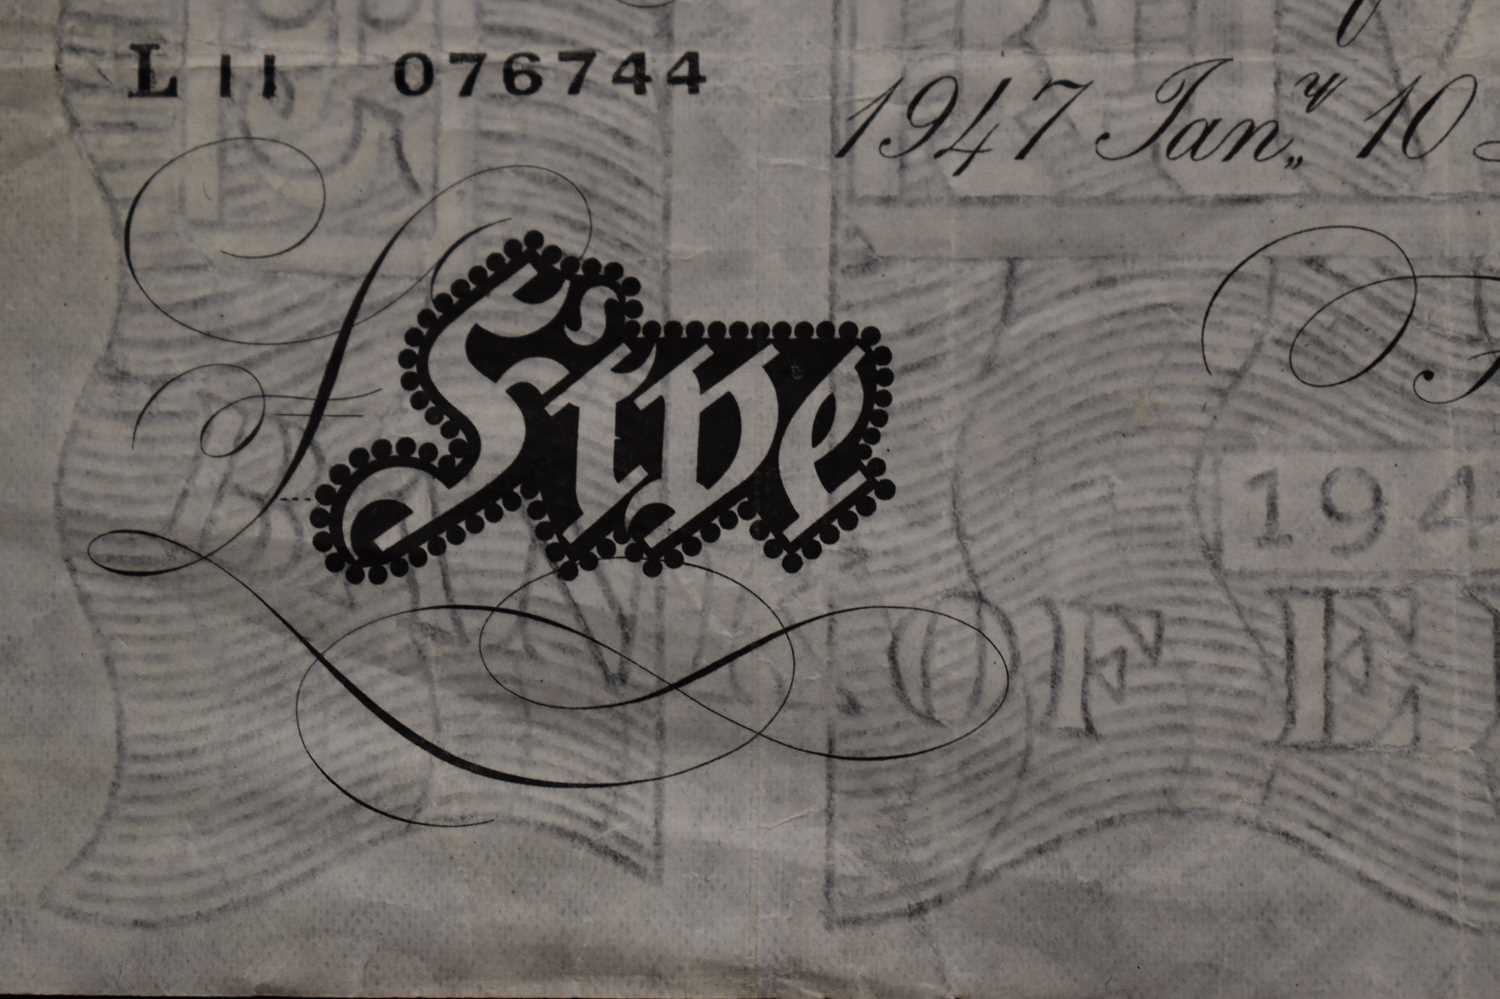 A Bank of England £5 five pound note 1947 Jan'y 10 London, Chief Cashier K O (Kenneth) Peppiatt - Image 4 of 4